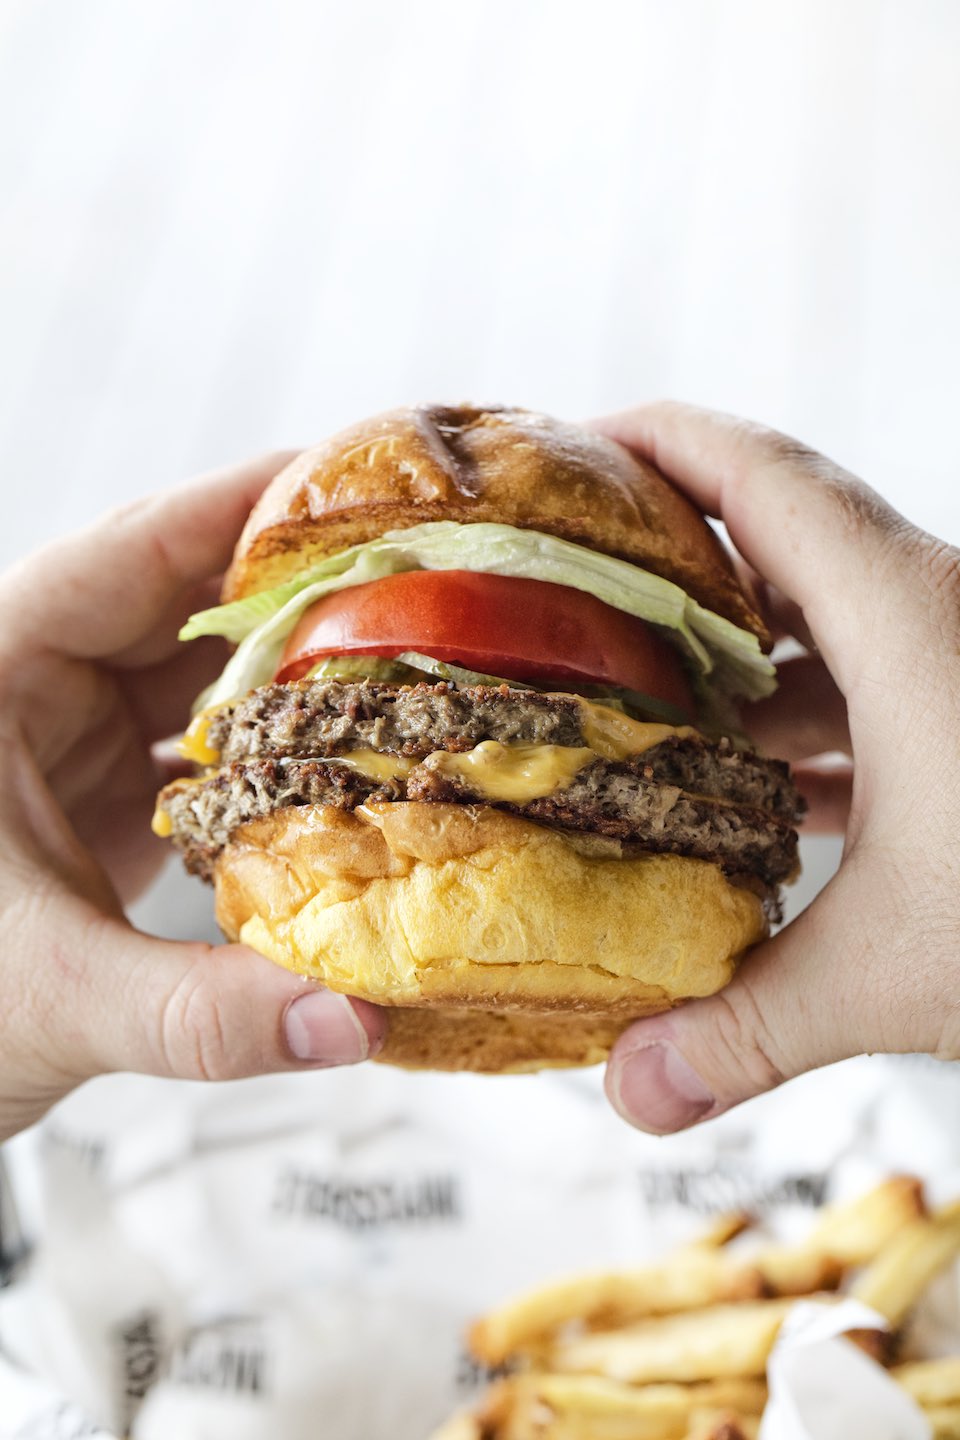 Hands holding a classic, double cheeseburger on a brioche bun. 